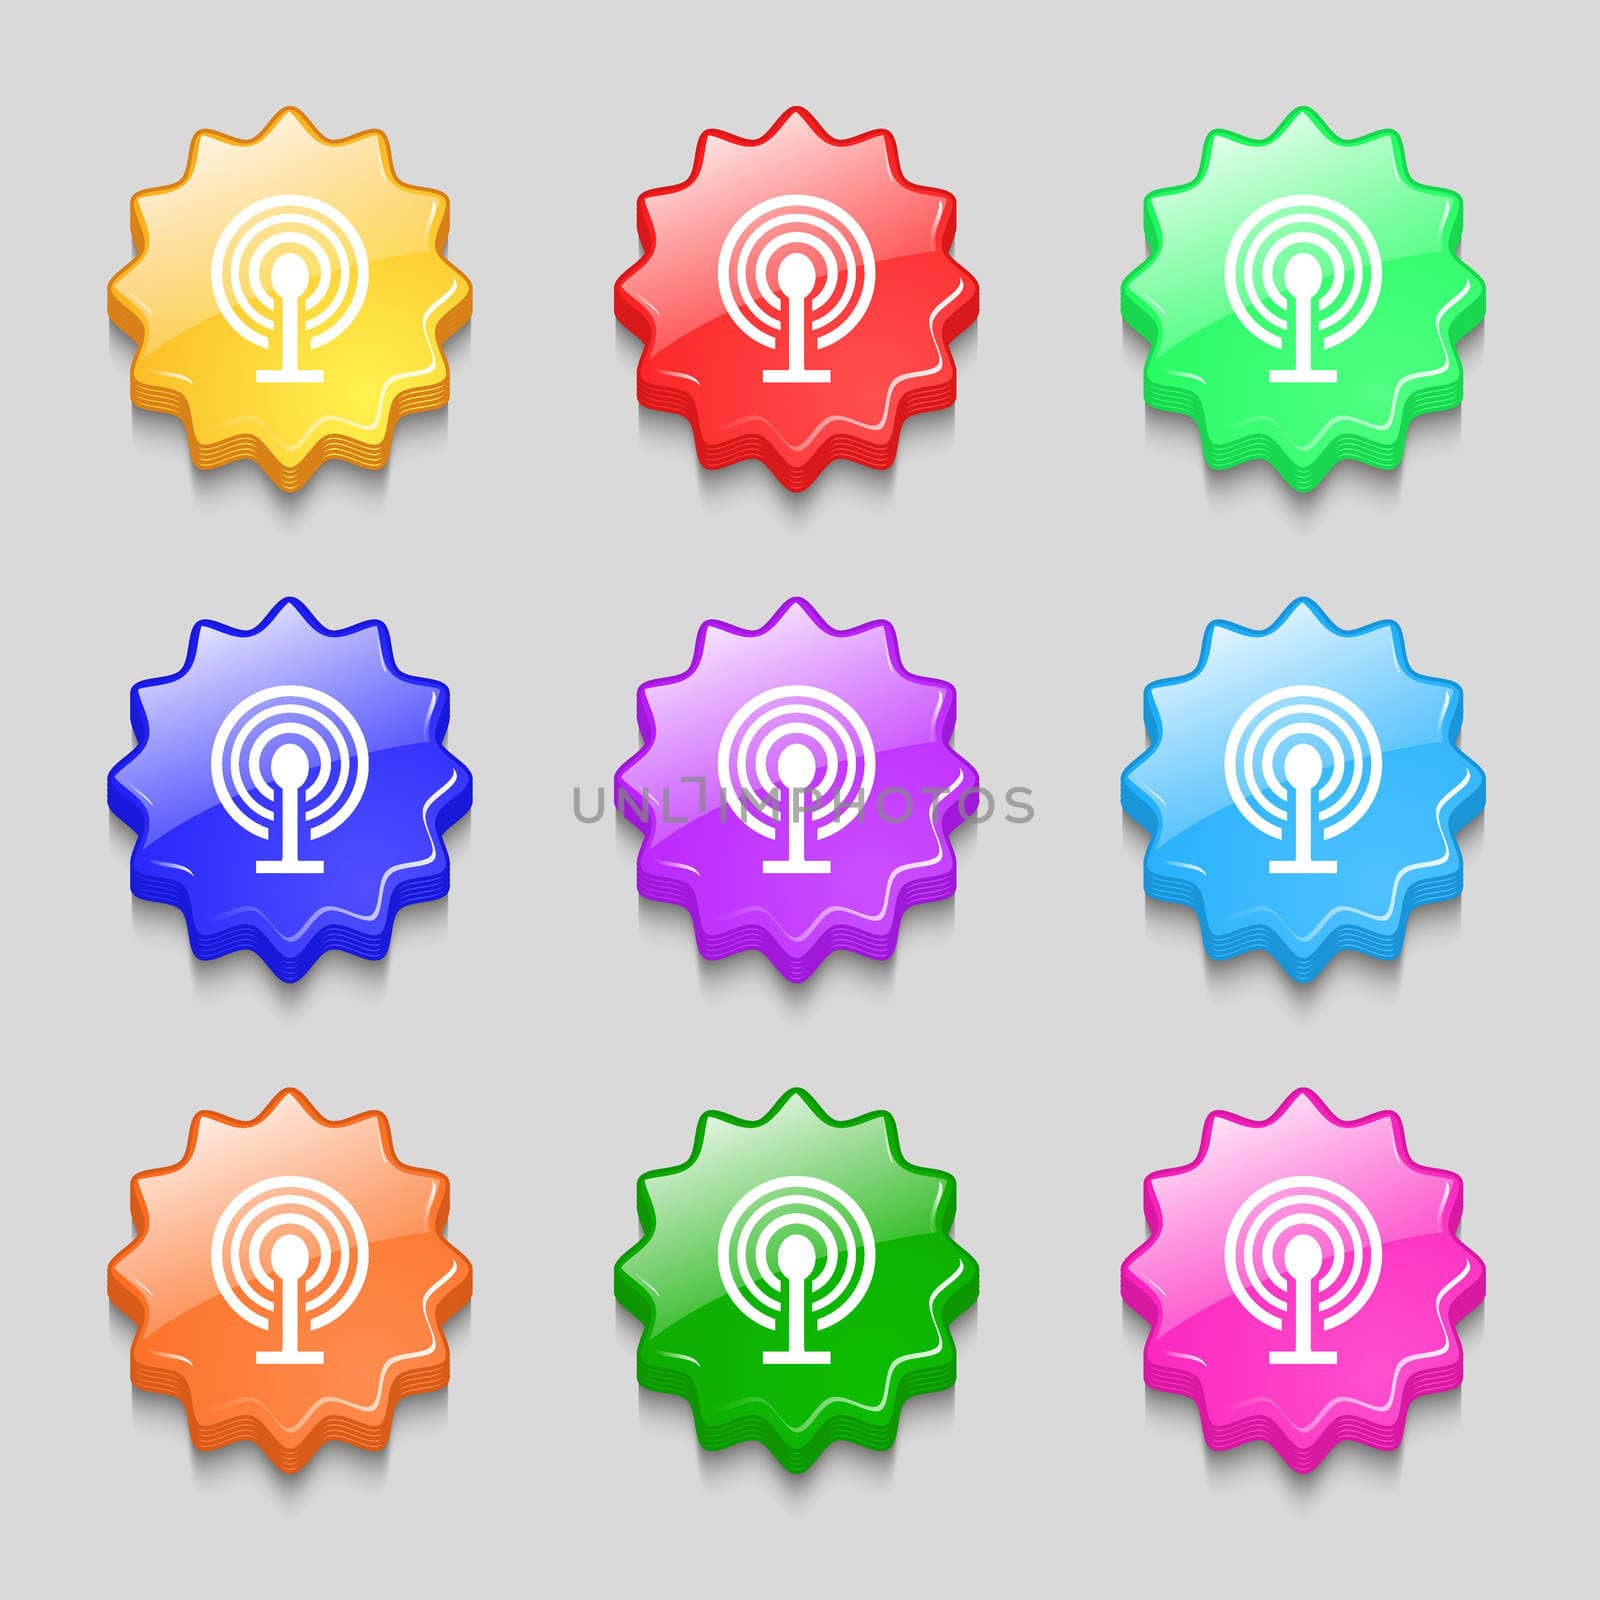 Wifi sign. Wi-fi symbol. Wireless Network icon zone. Symbols on nine wavy colourful buttons. illustration